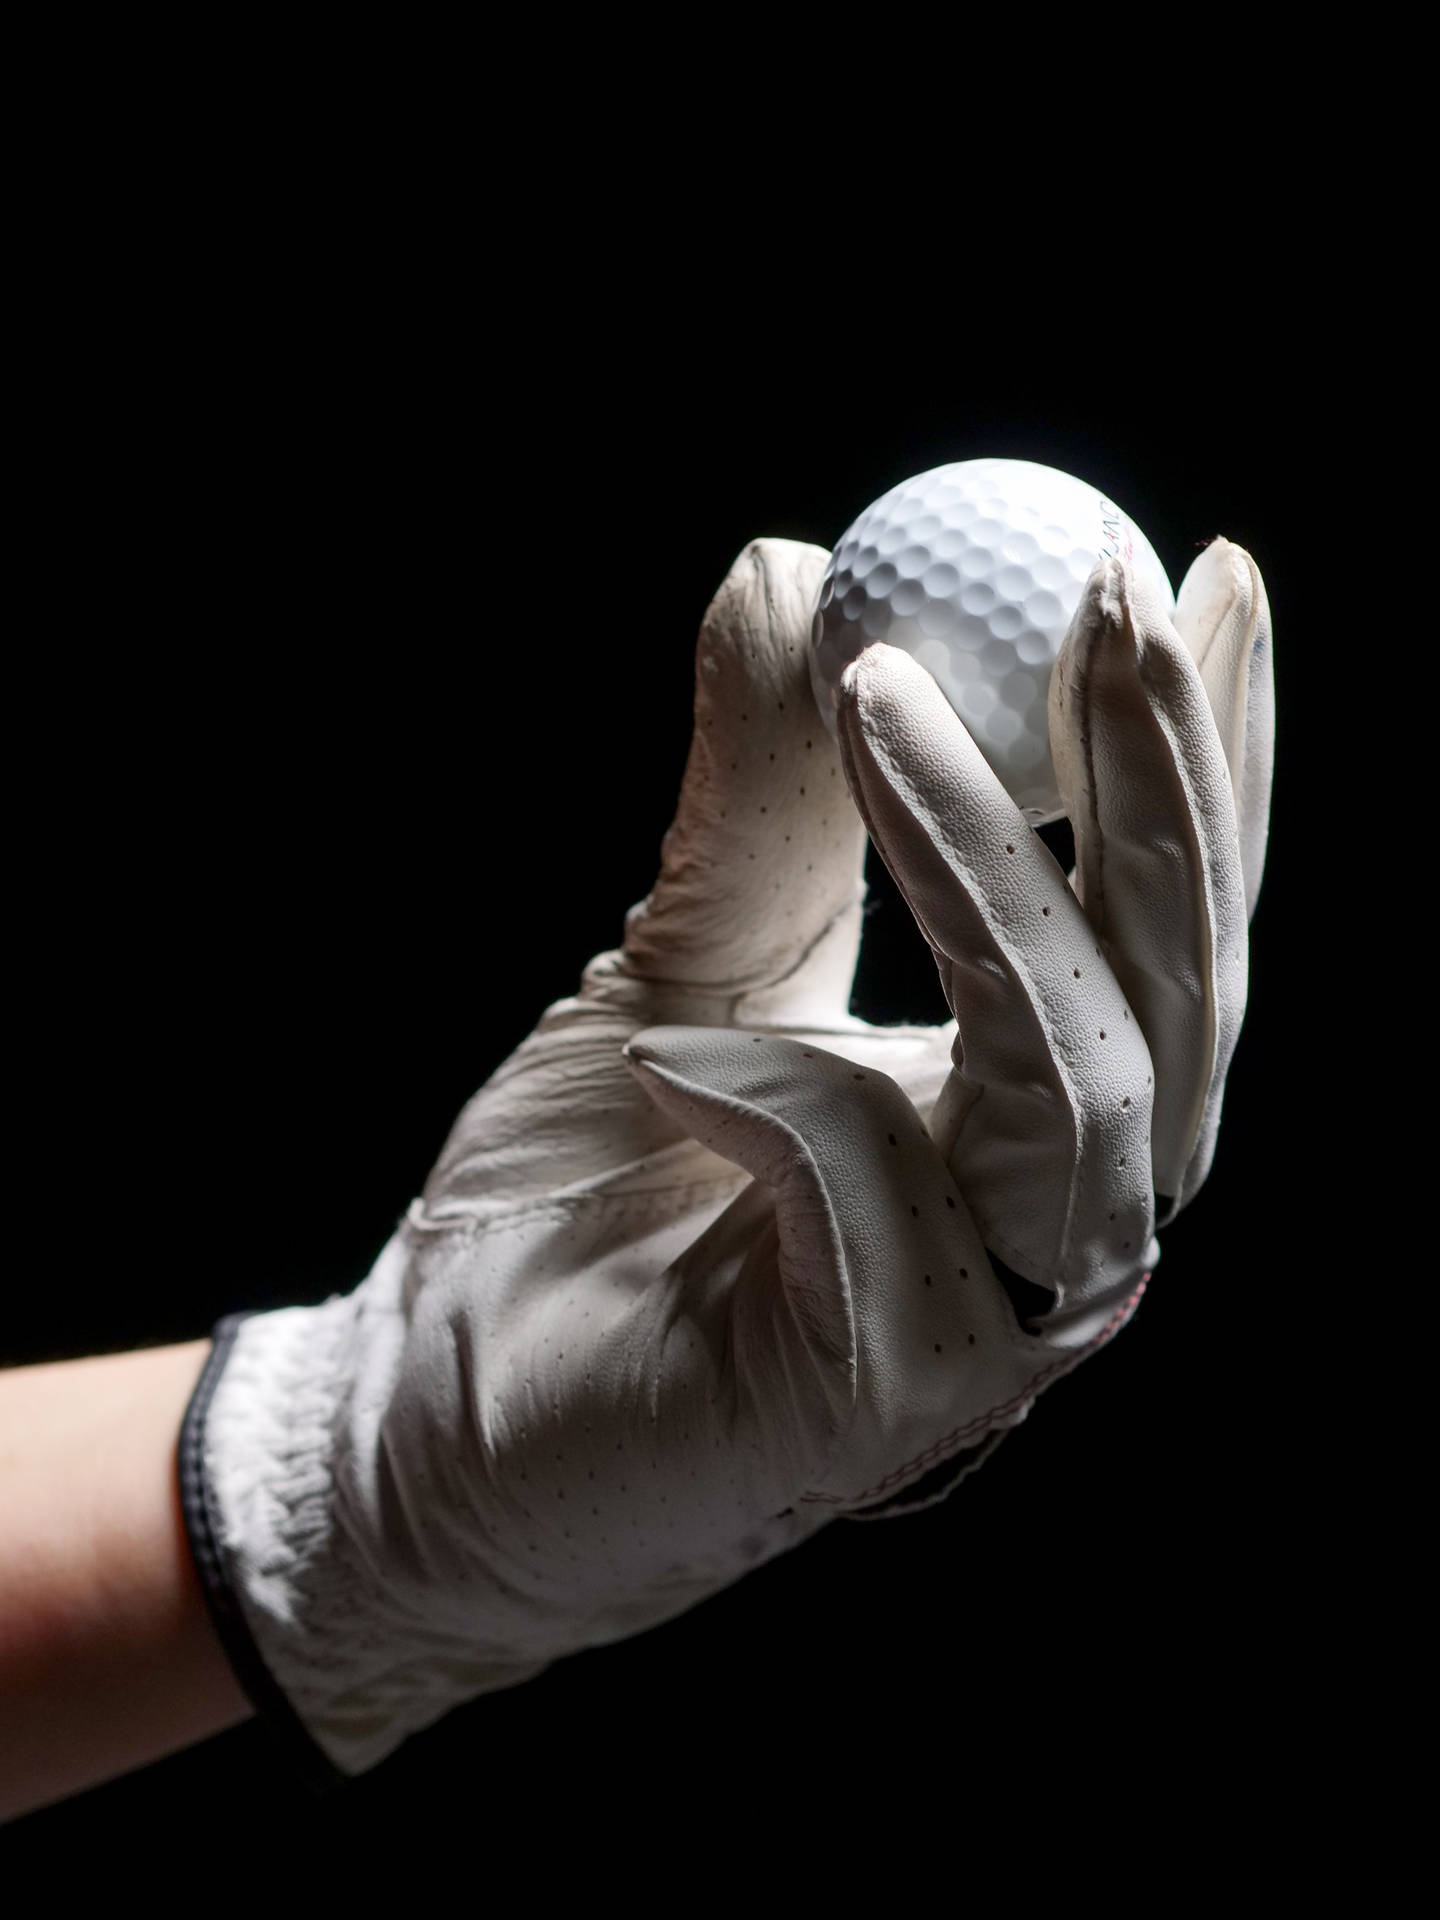 4k Hand Holding Golf Ball Background